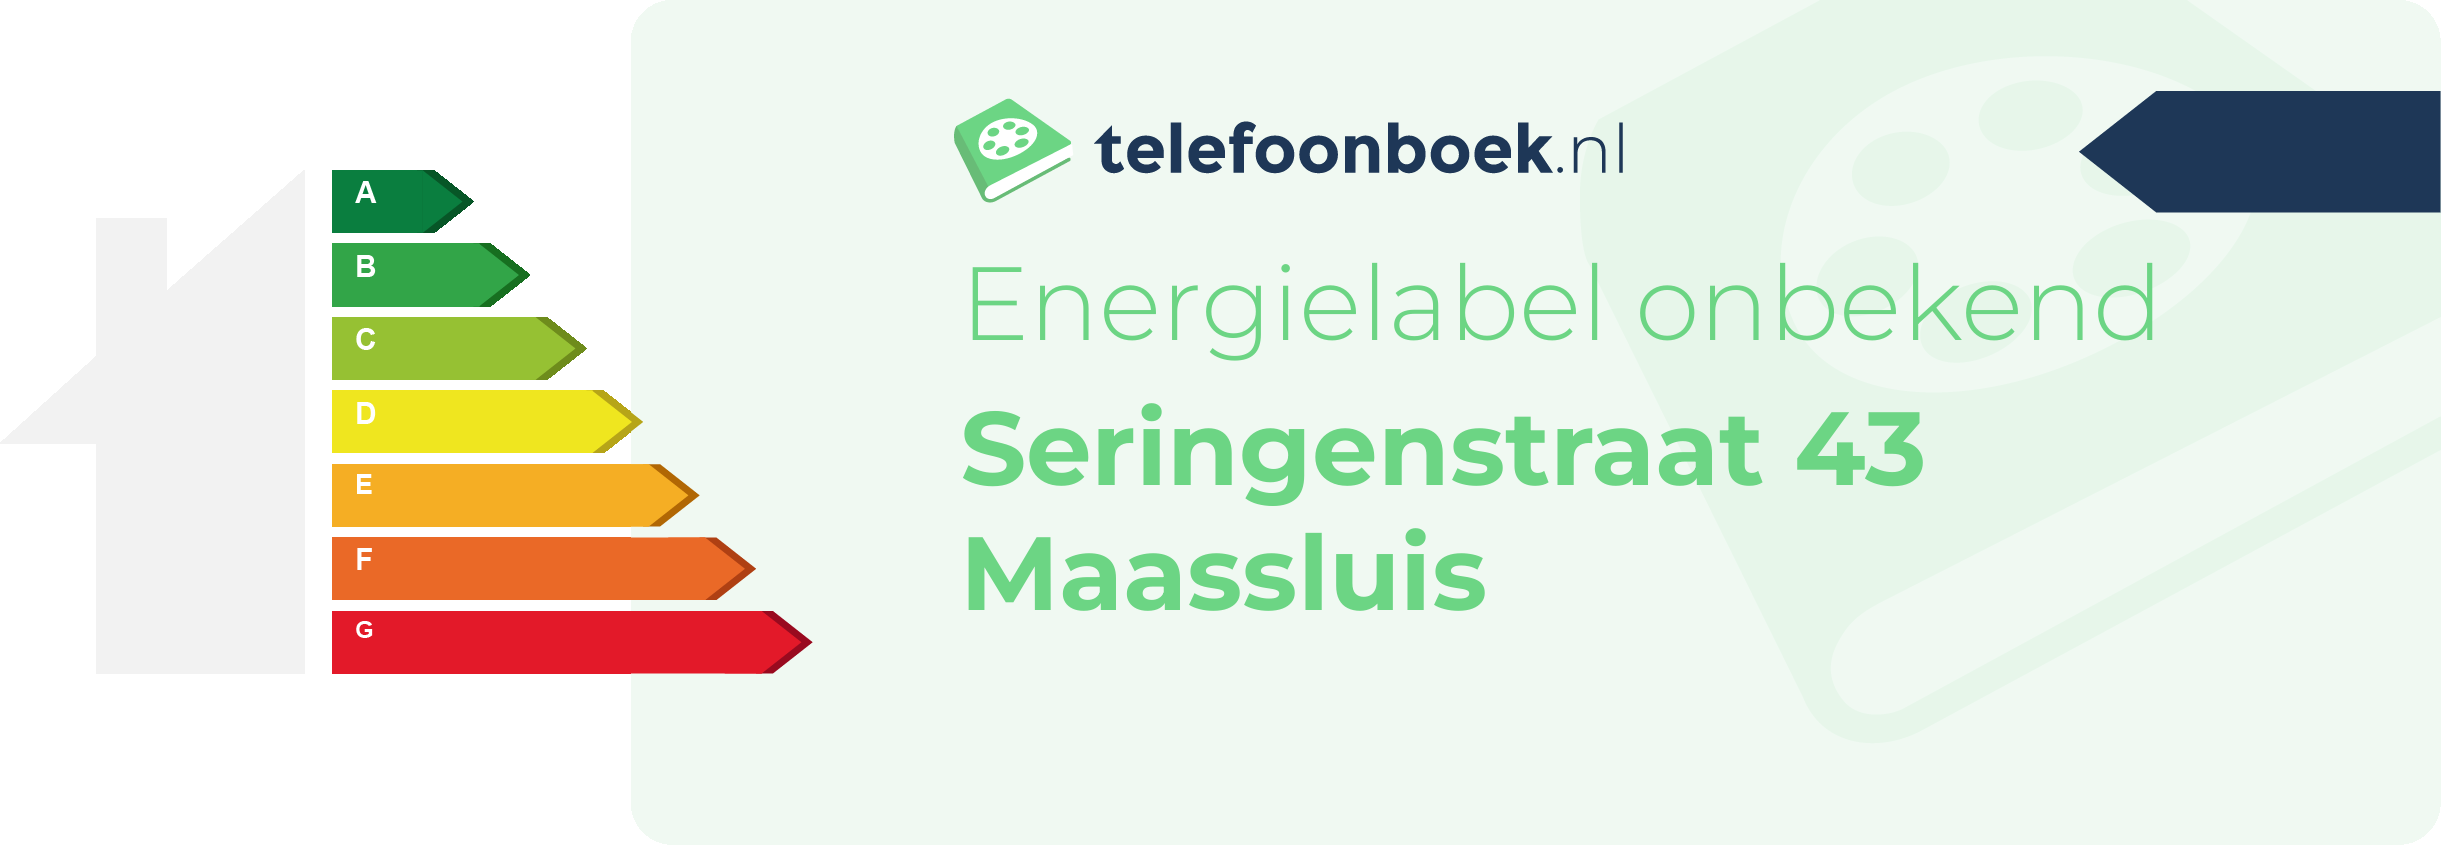 Energielabel Seringenstraat 43 Maassluis